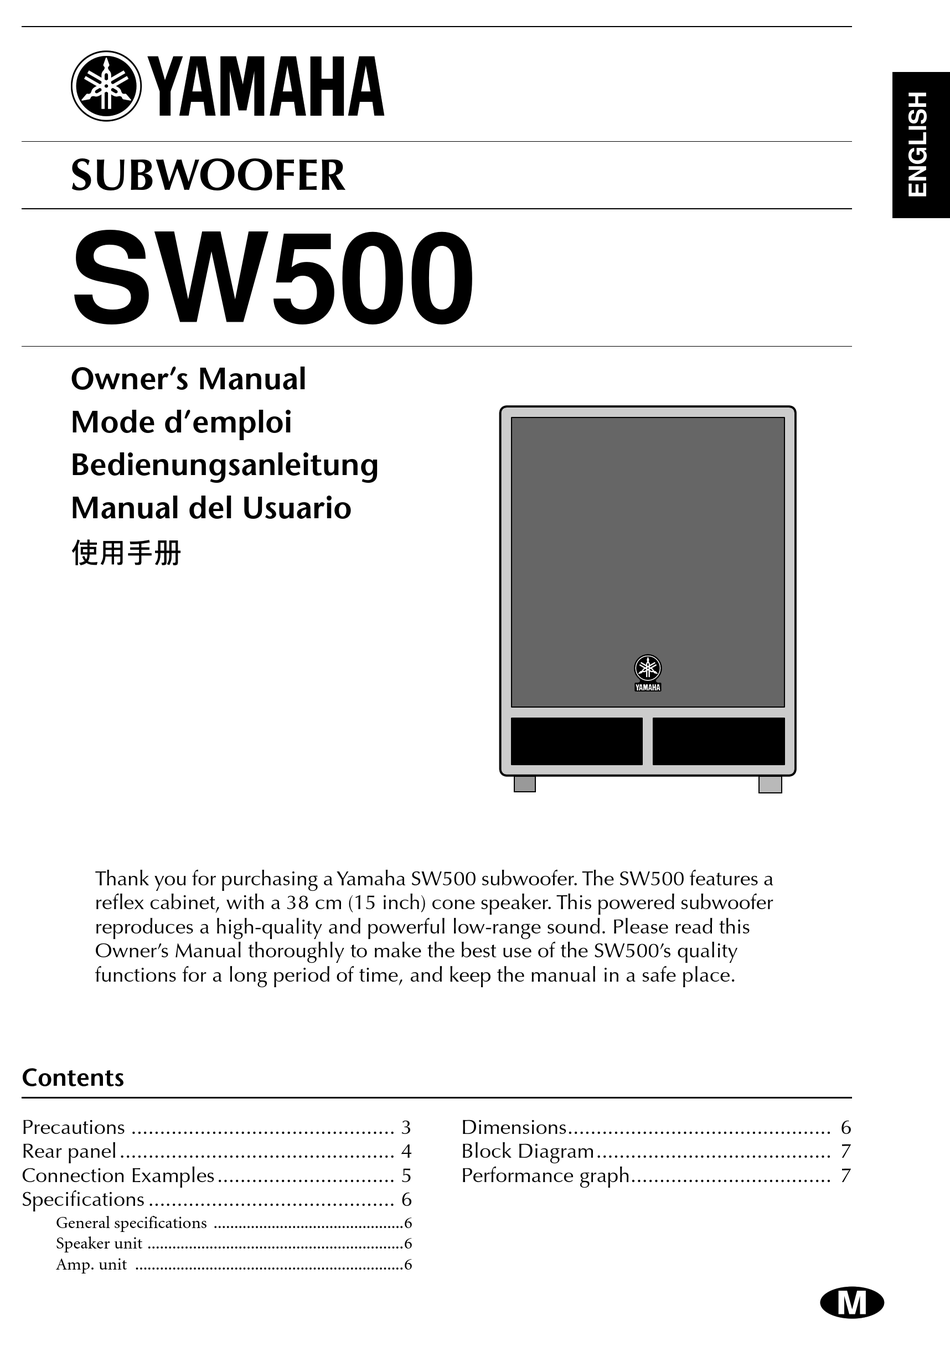 YAMAHA SW500 OWNER'S MANUAL Pdf Download | ManualsLib